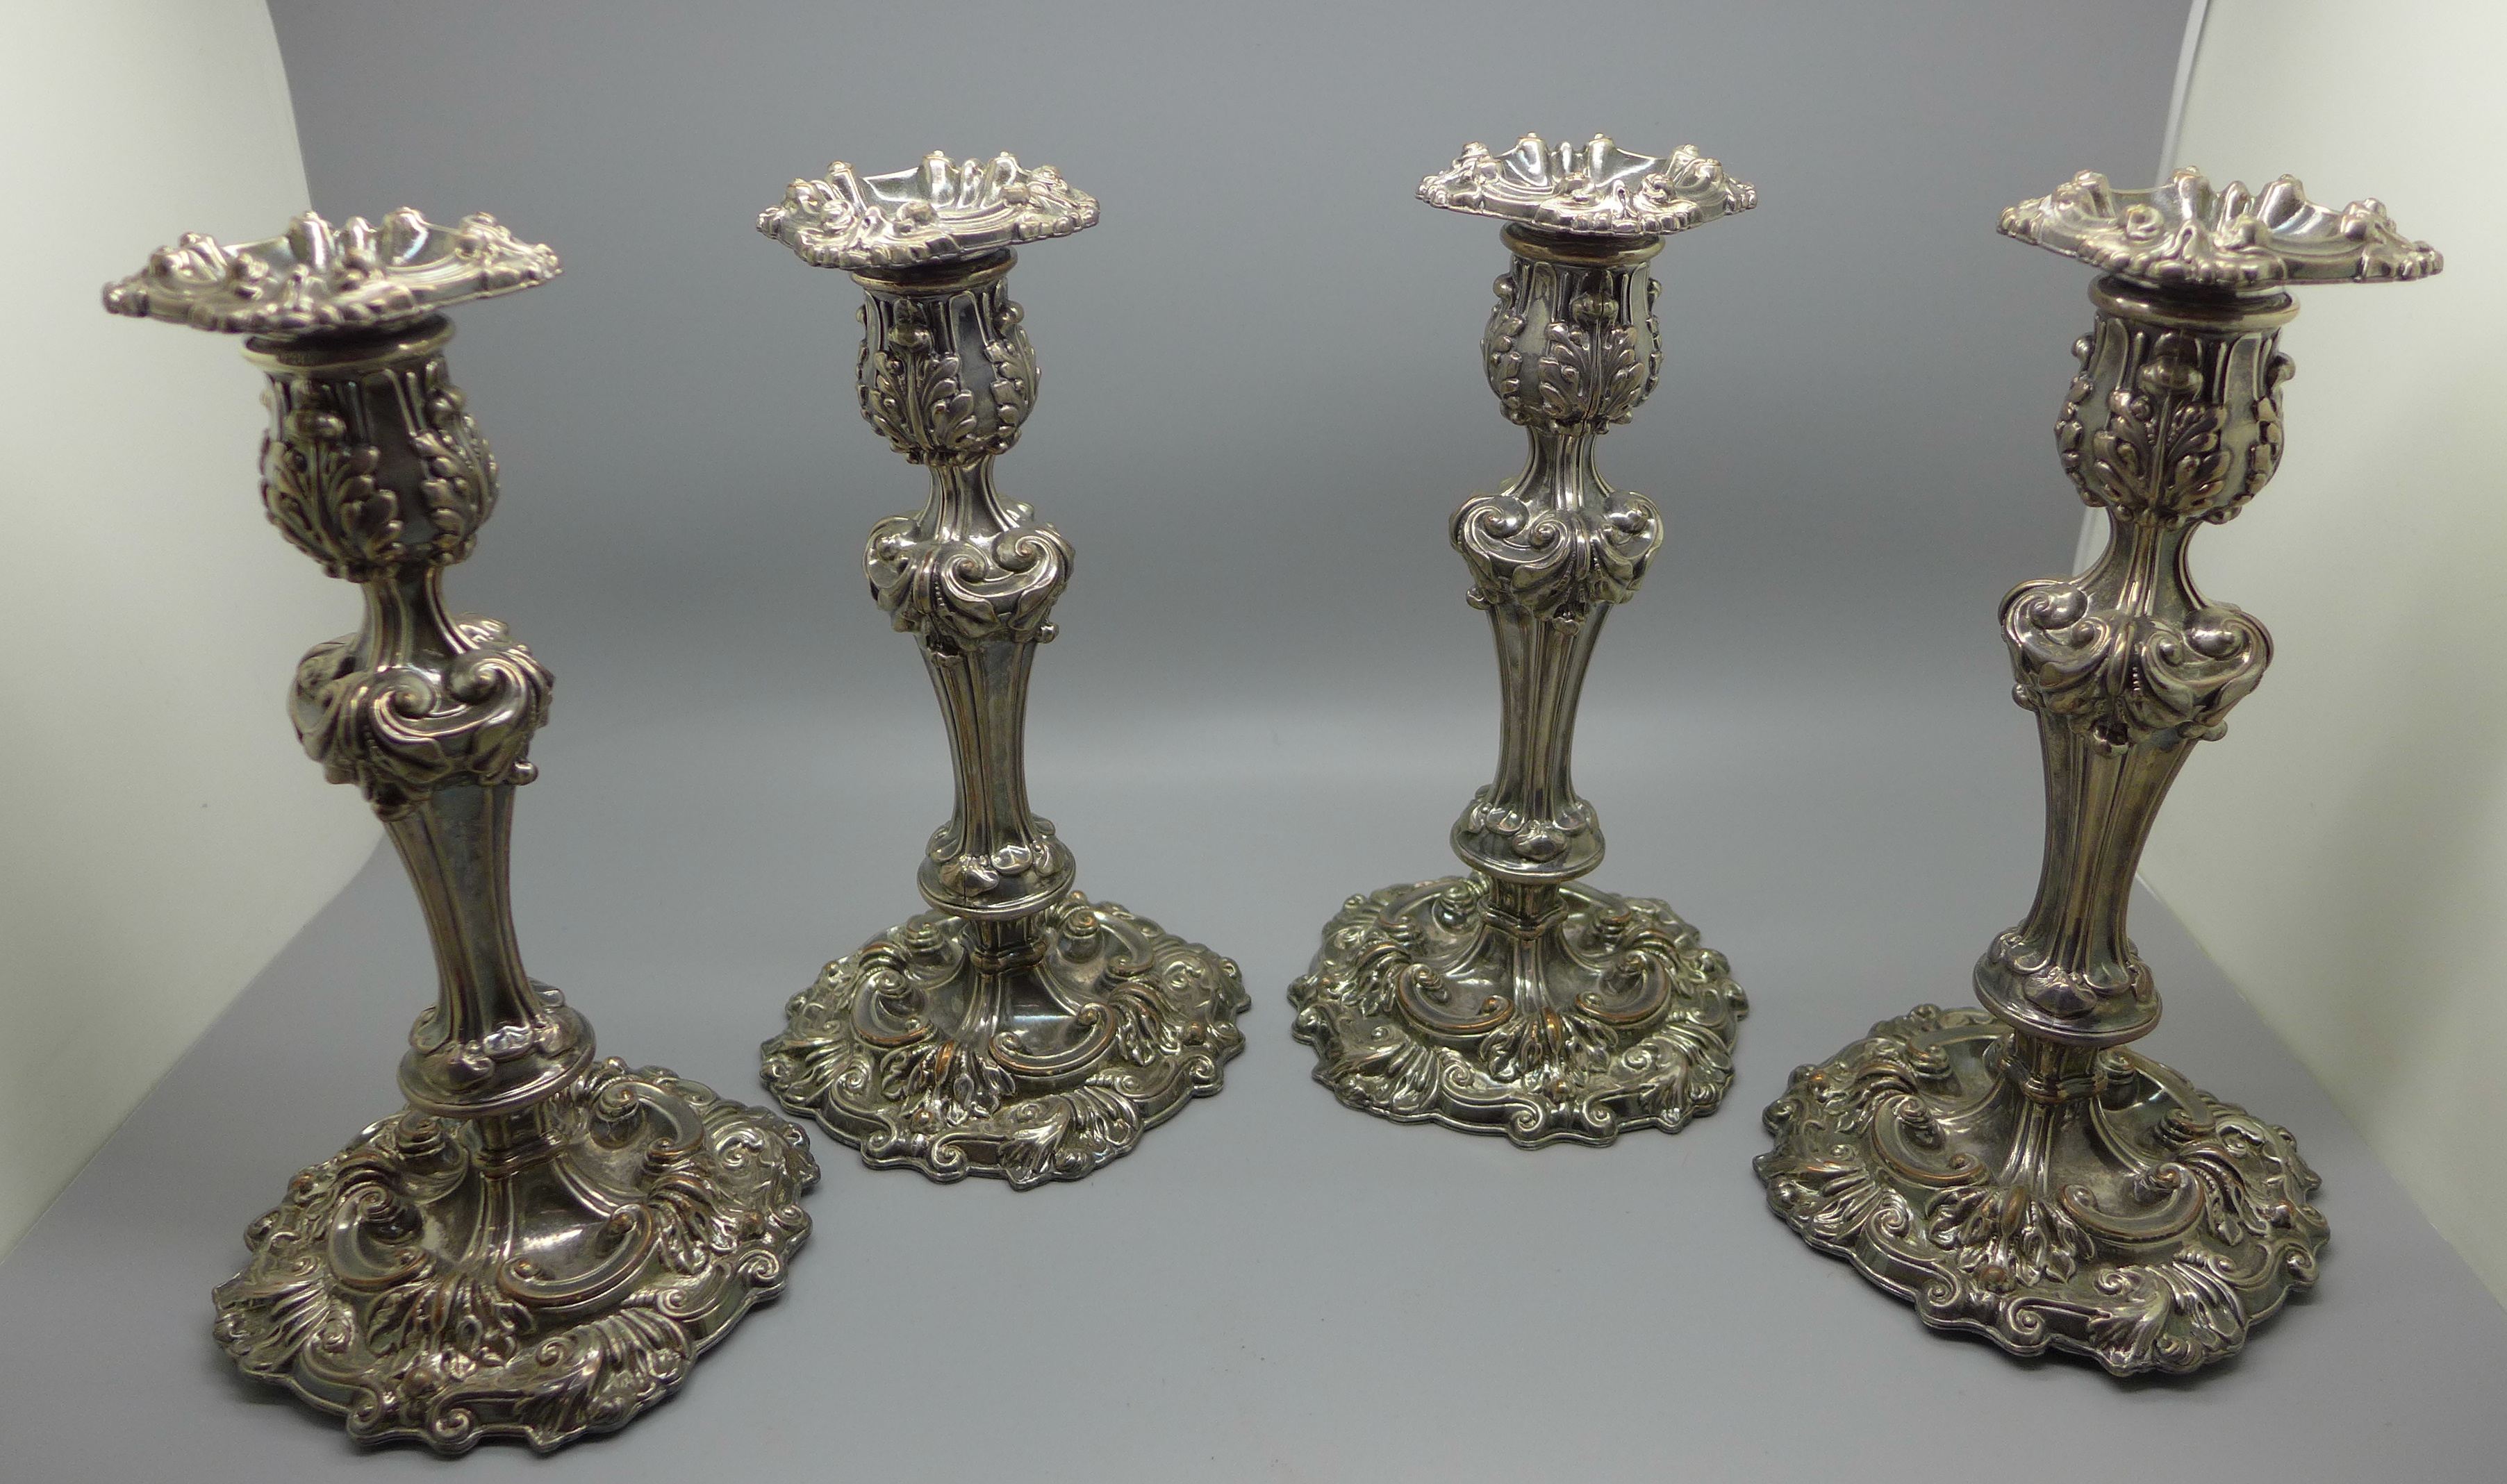 Four matching old Sheffield plate candlesticks with original sconces, circa 1830, 21cm